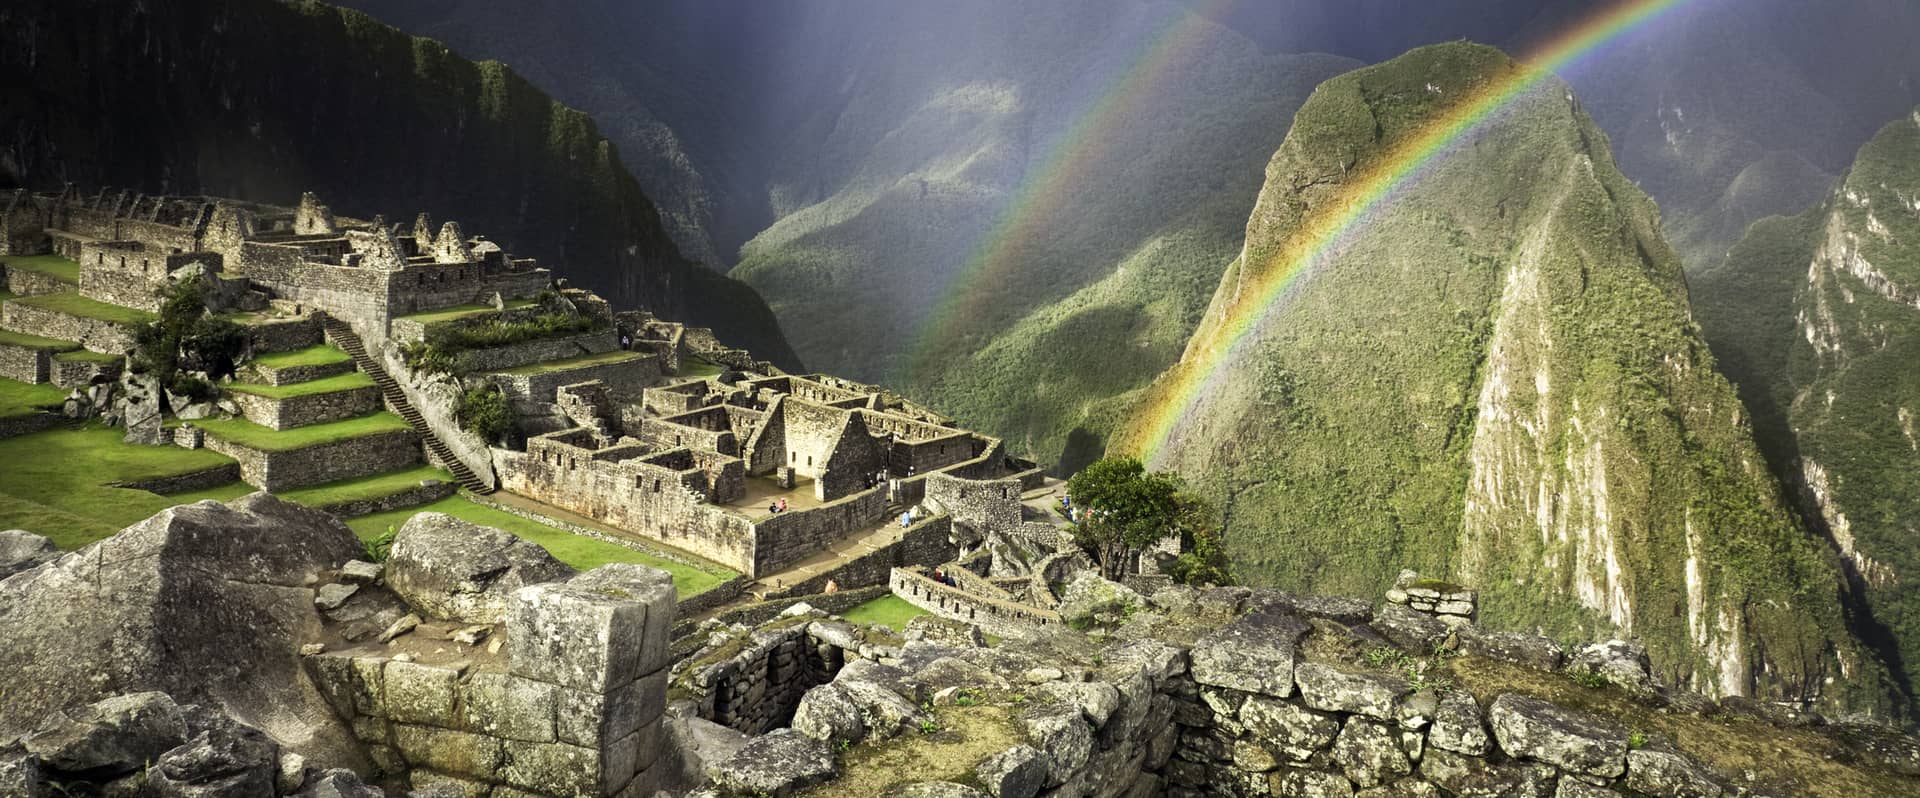 Arcoíris en Machu Picchu - Tour a Machu Picchu